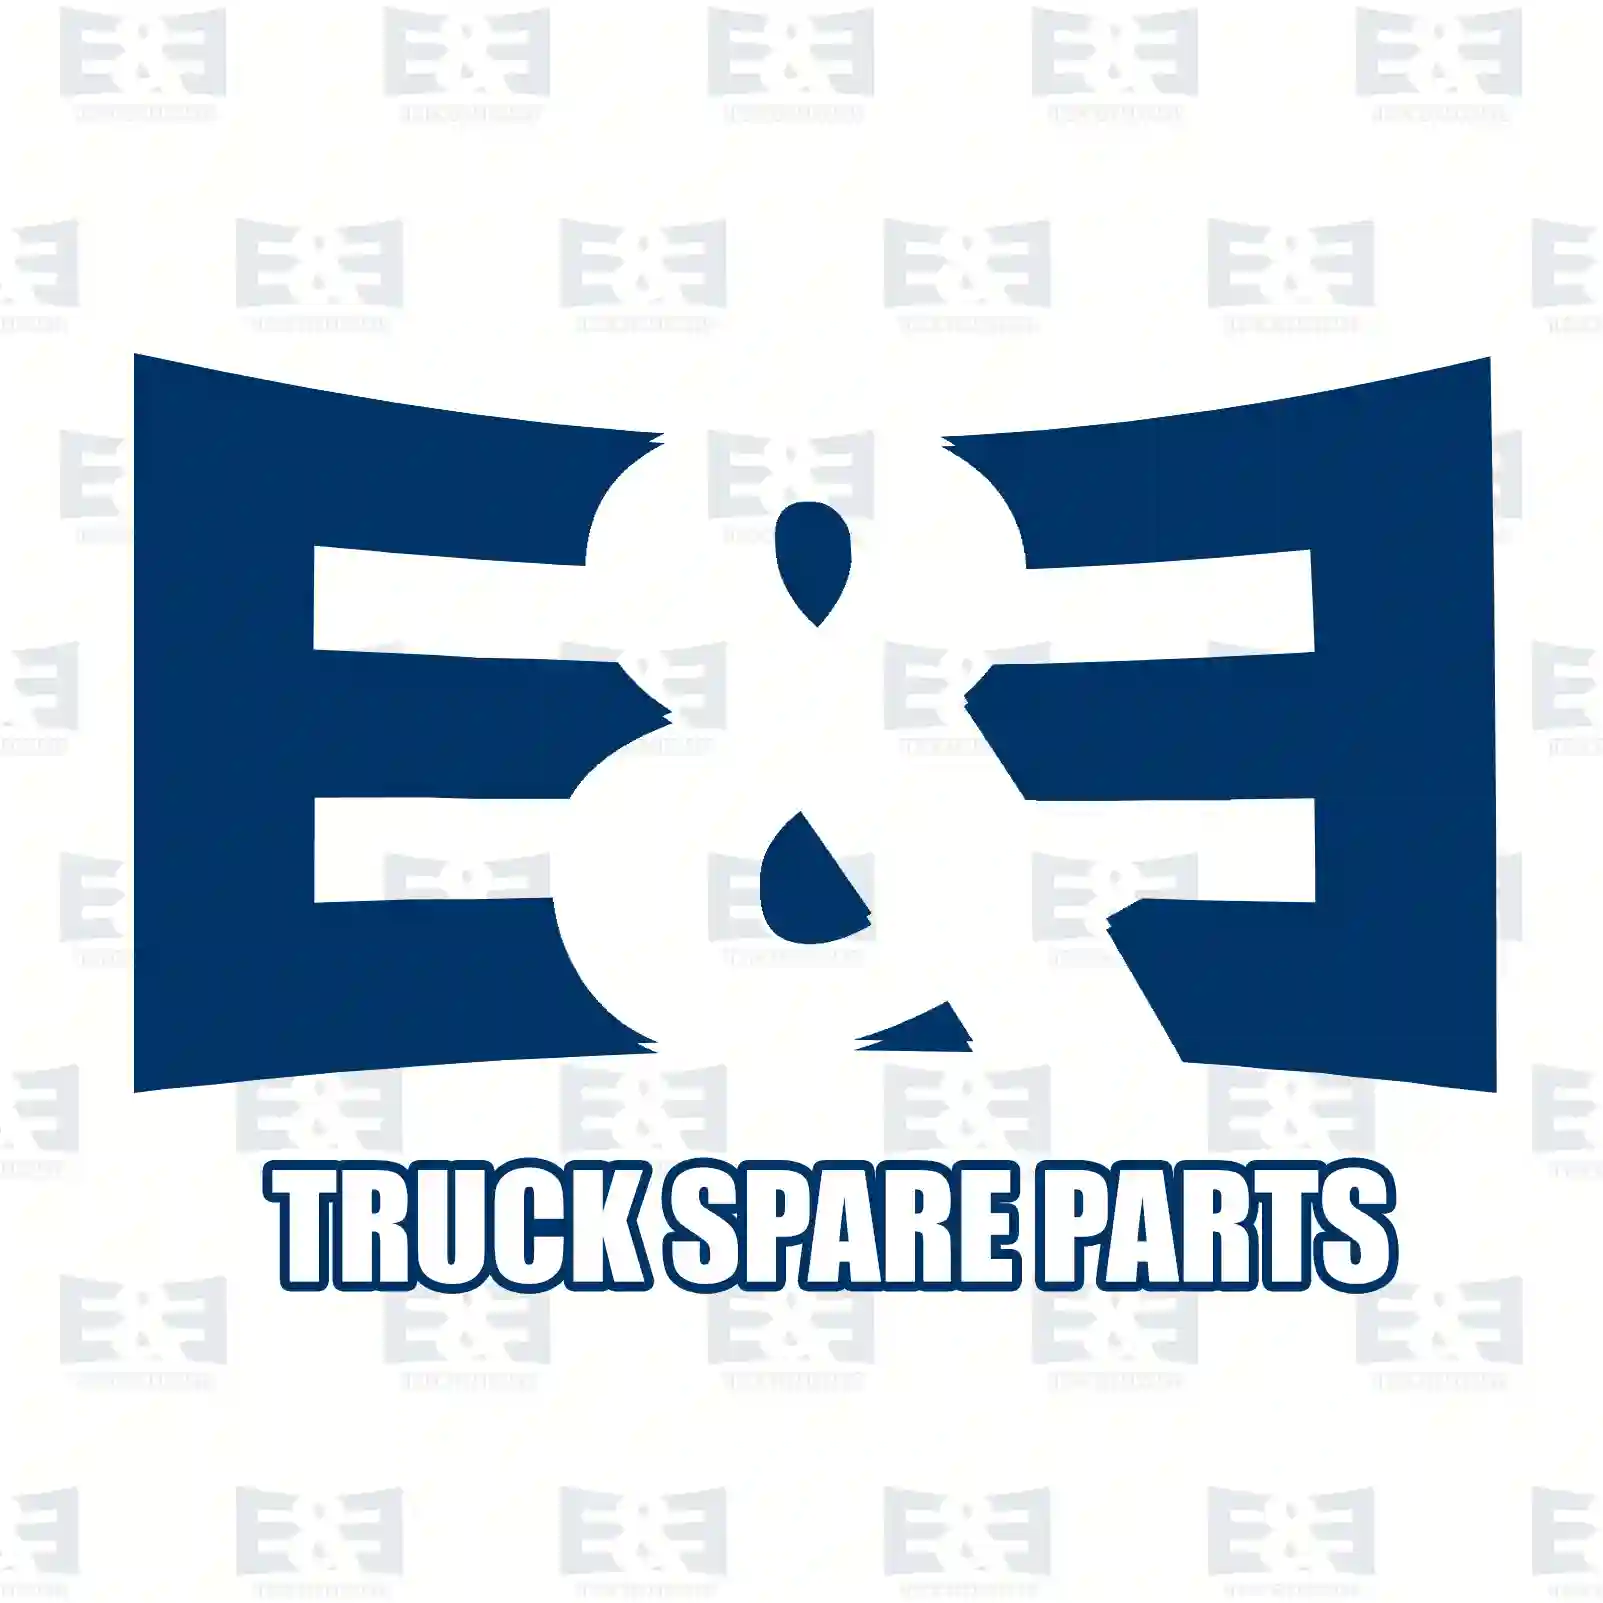 Cylinder head gasket, 2E2200768, 9111867, 9121130, 11044-00QAD, 82001-21998, 1116363, 4403867, 4405297, 4416363, 8200028727, 8200121998, 8200215051, 8200406740 ||  2E2200768 E&E Truck Spare Parts | Truck Spare Parts, Auotomotive Spare Parts Cylinder head gasket, 2E2200768, 9111867, 9121130, 11044-00QAD, 82001-21998, 1116363, 4403867, 4405297, 4416363, 8200028727, 8200121998, 8200215051, 8200406740 ||  2E2200768 E&E Truck Spare Parts | Truck Spare Parts, Auotomotive Spare Parts